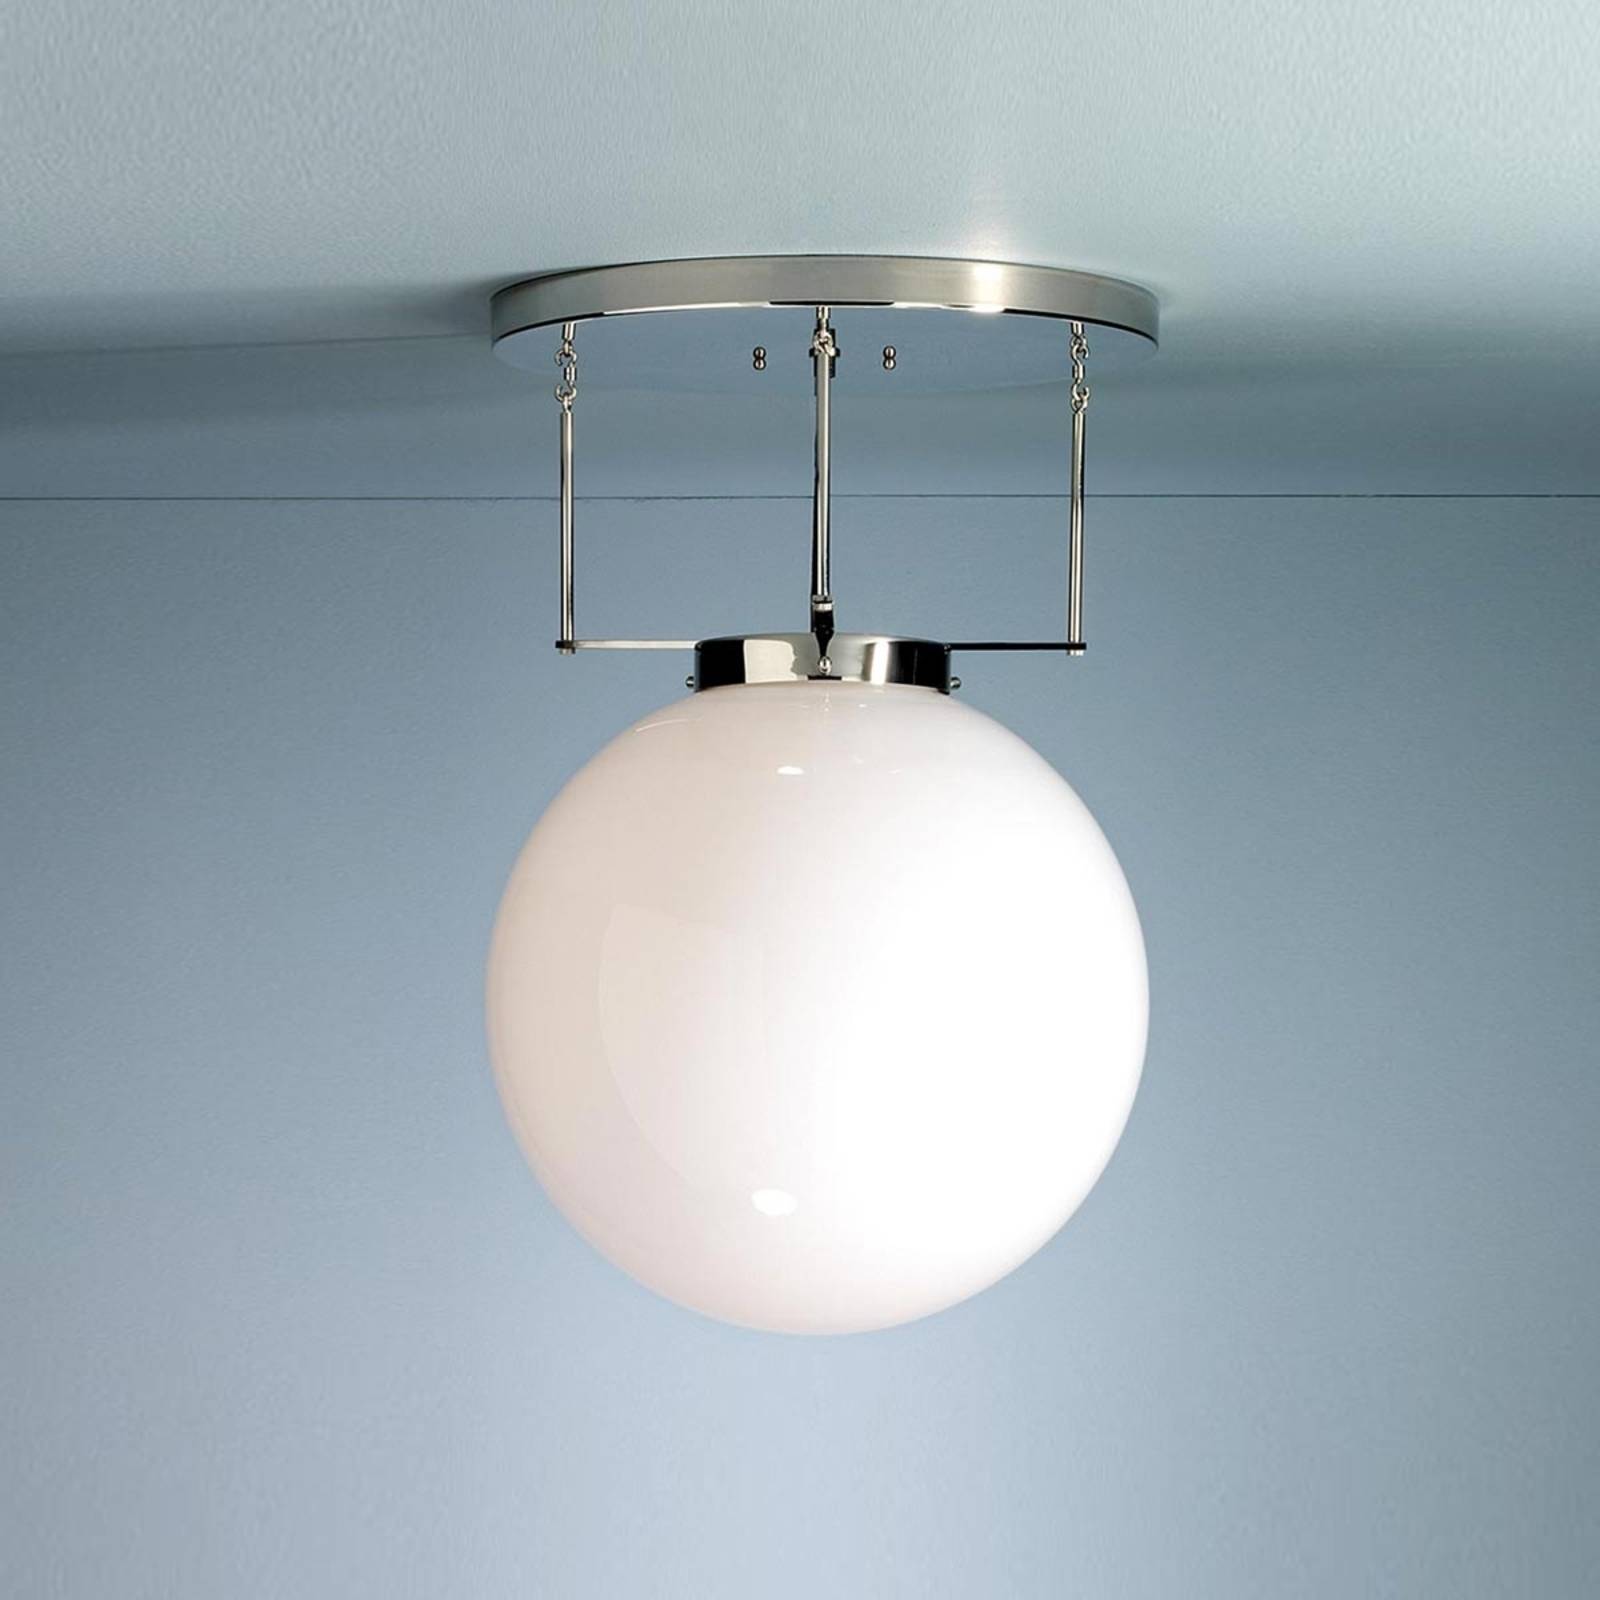 Lampa sufitowa Brandt w stylu Bauhaus 25cm nikiel